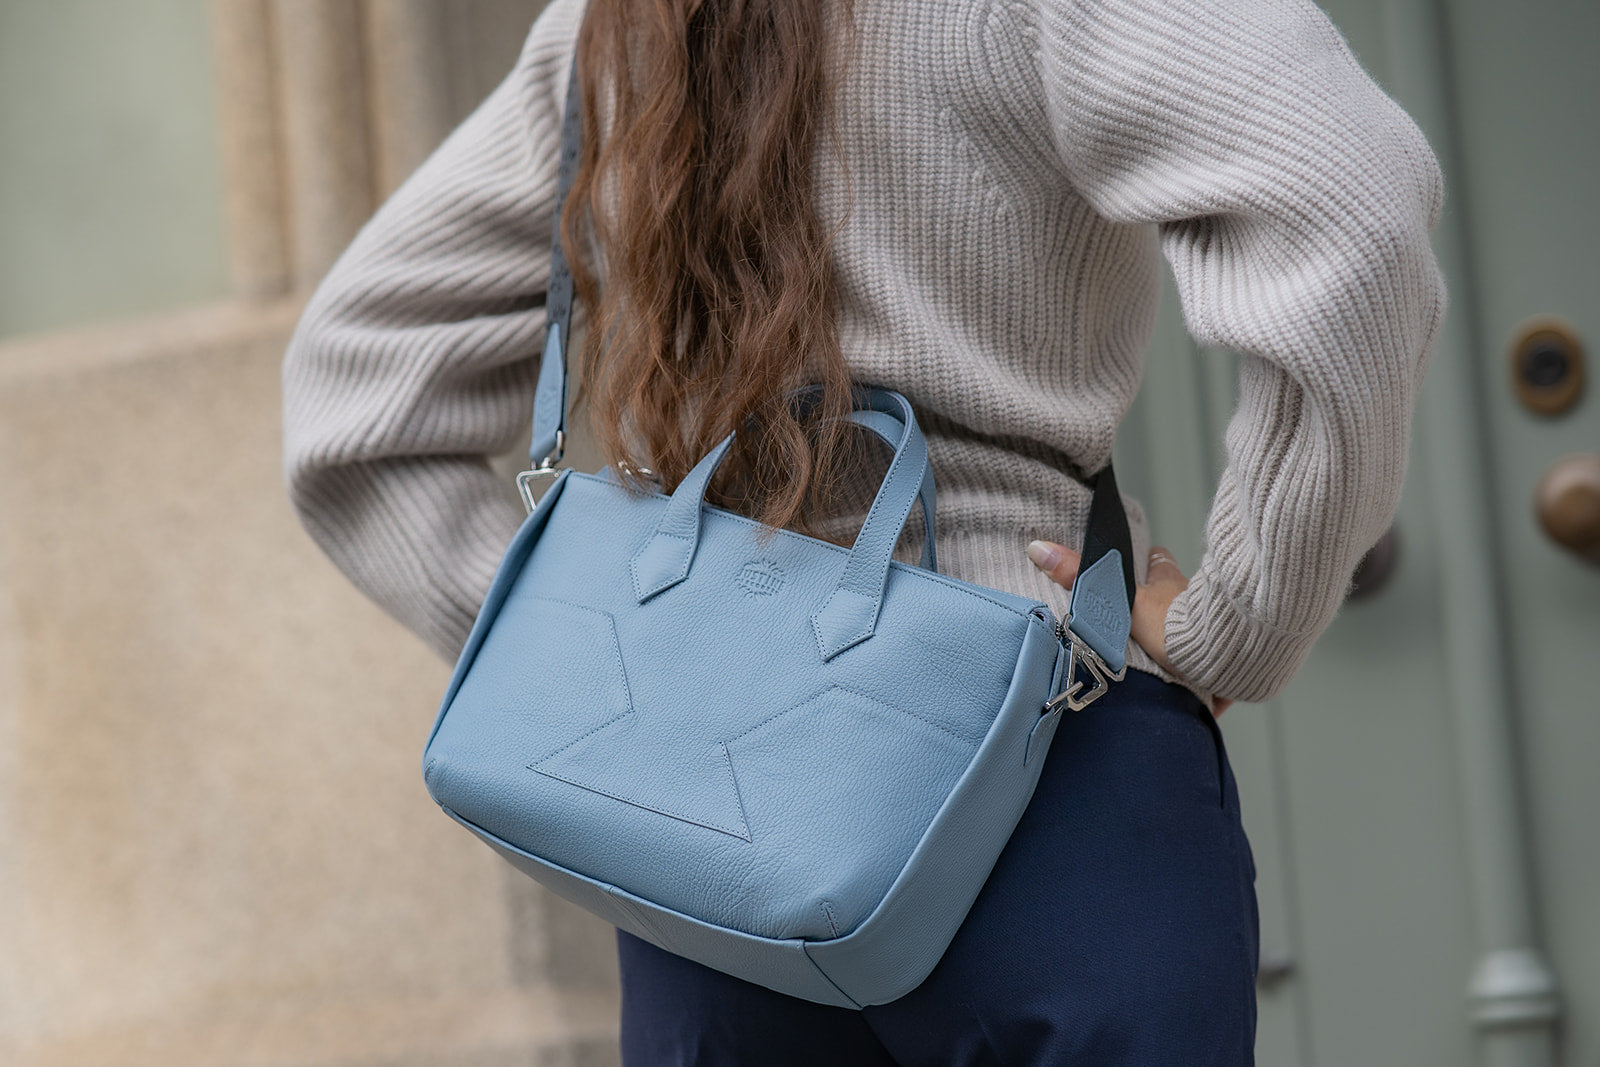 Justine Leconte crossbody handbag with shoulder strap in the color stone blue